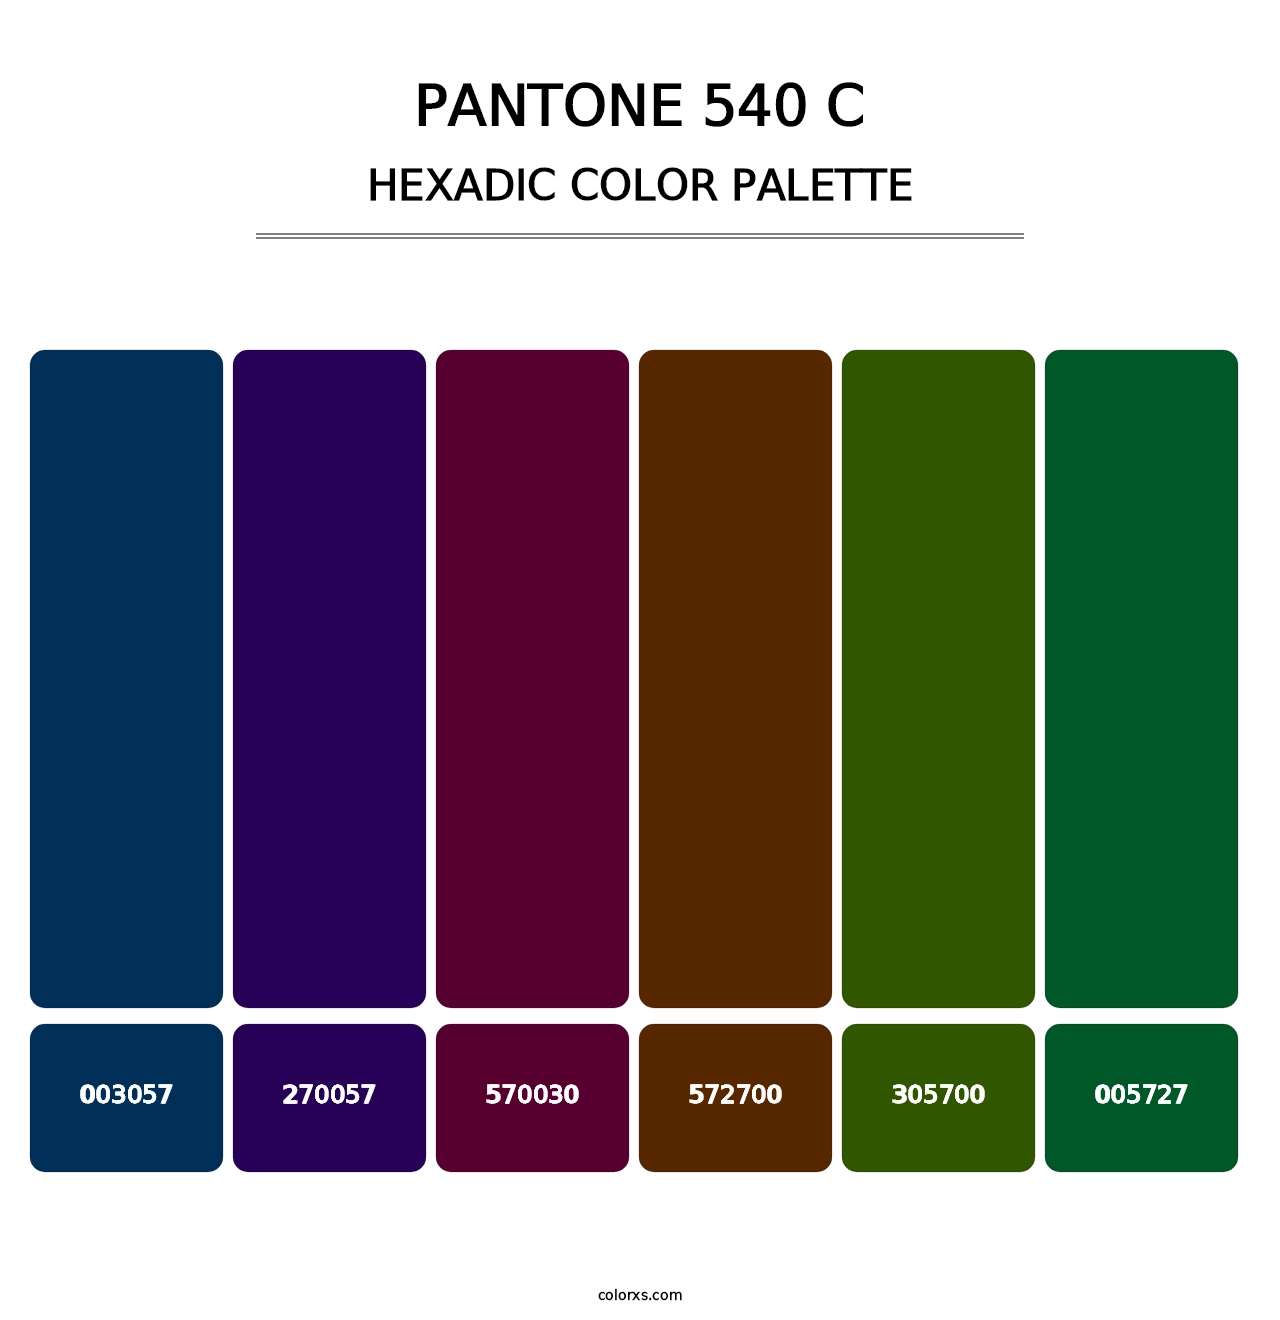 PANTONE 540 C - Hexadic Color Palette